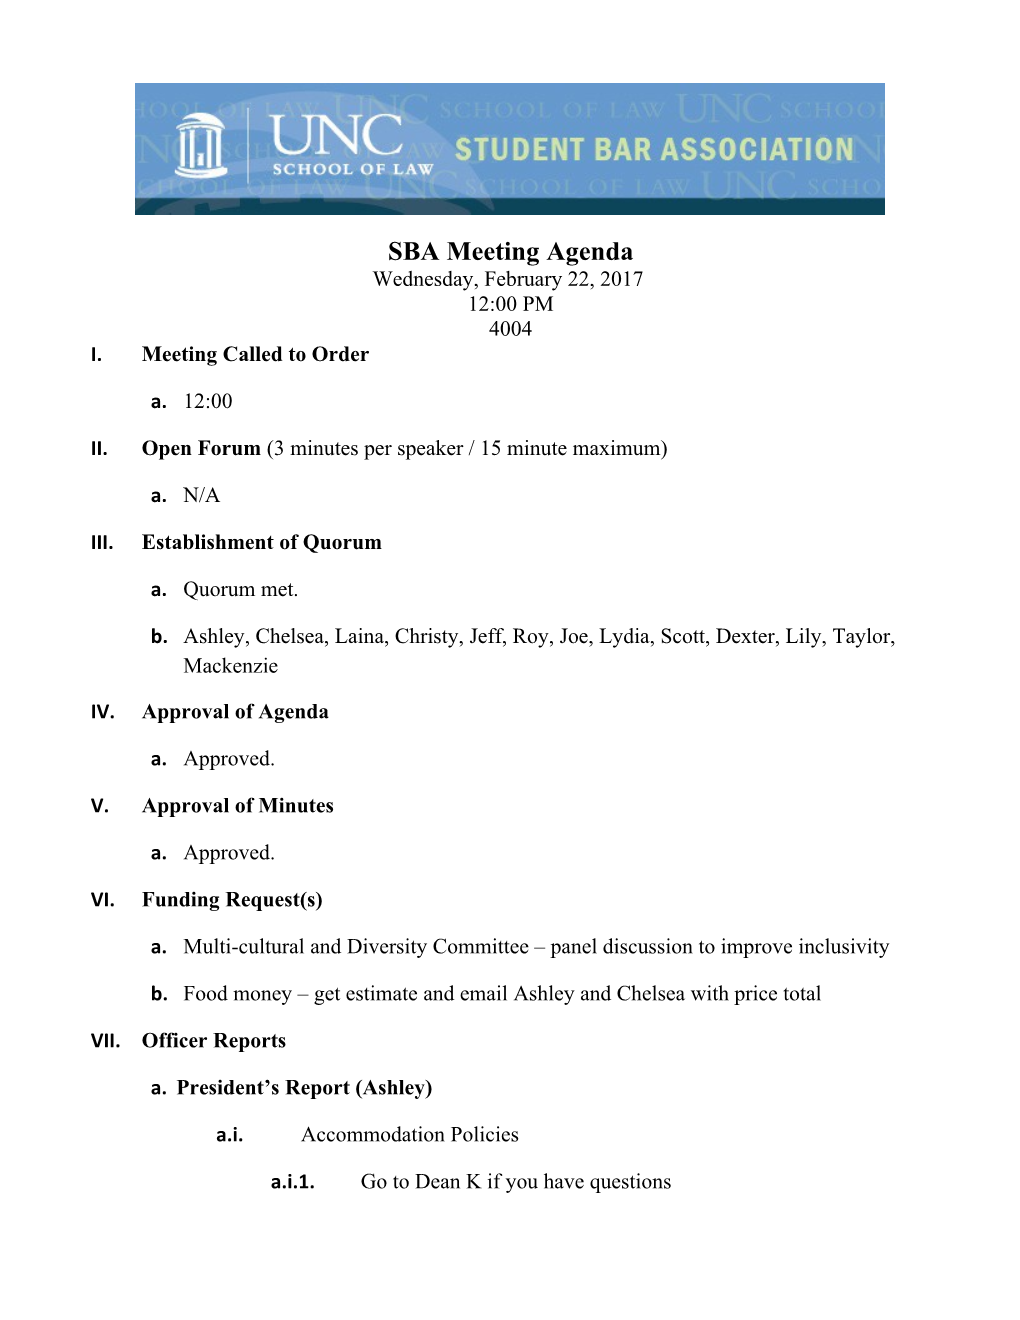 SBA Meeting Agenda s1